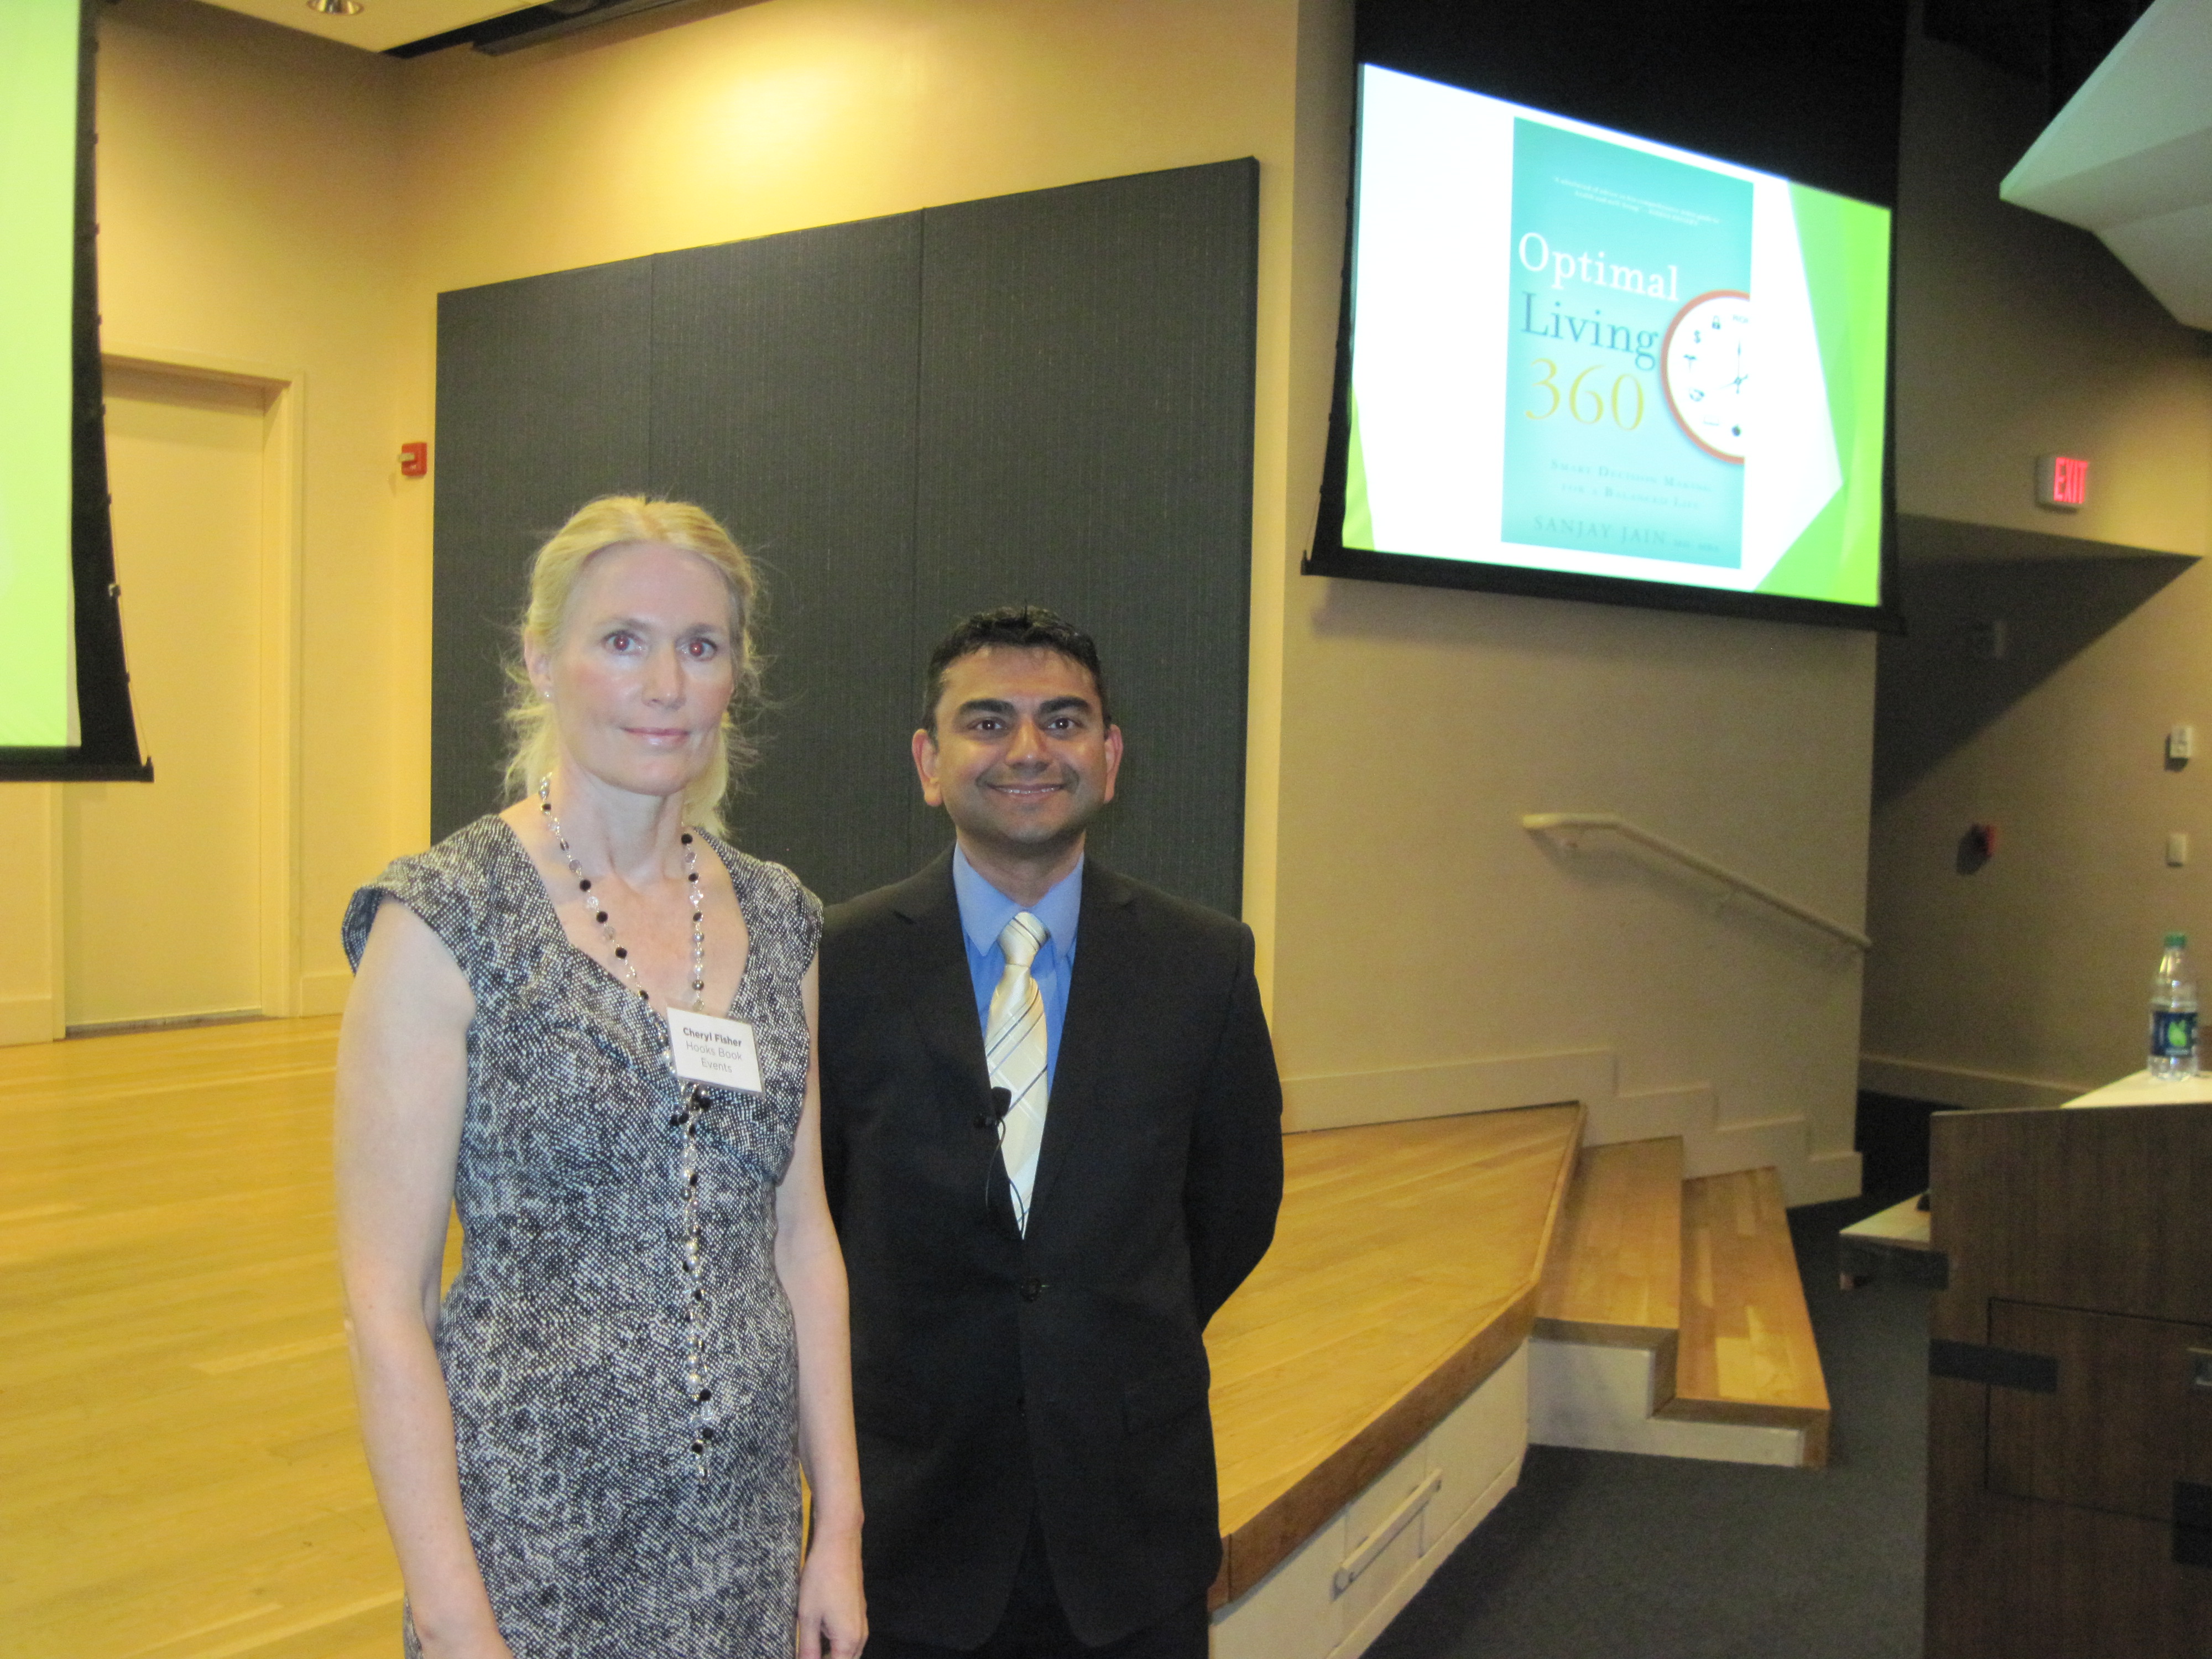 ATB - Sanjay Jain and HBE Cheryl Fisher at TPCC, March 2014